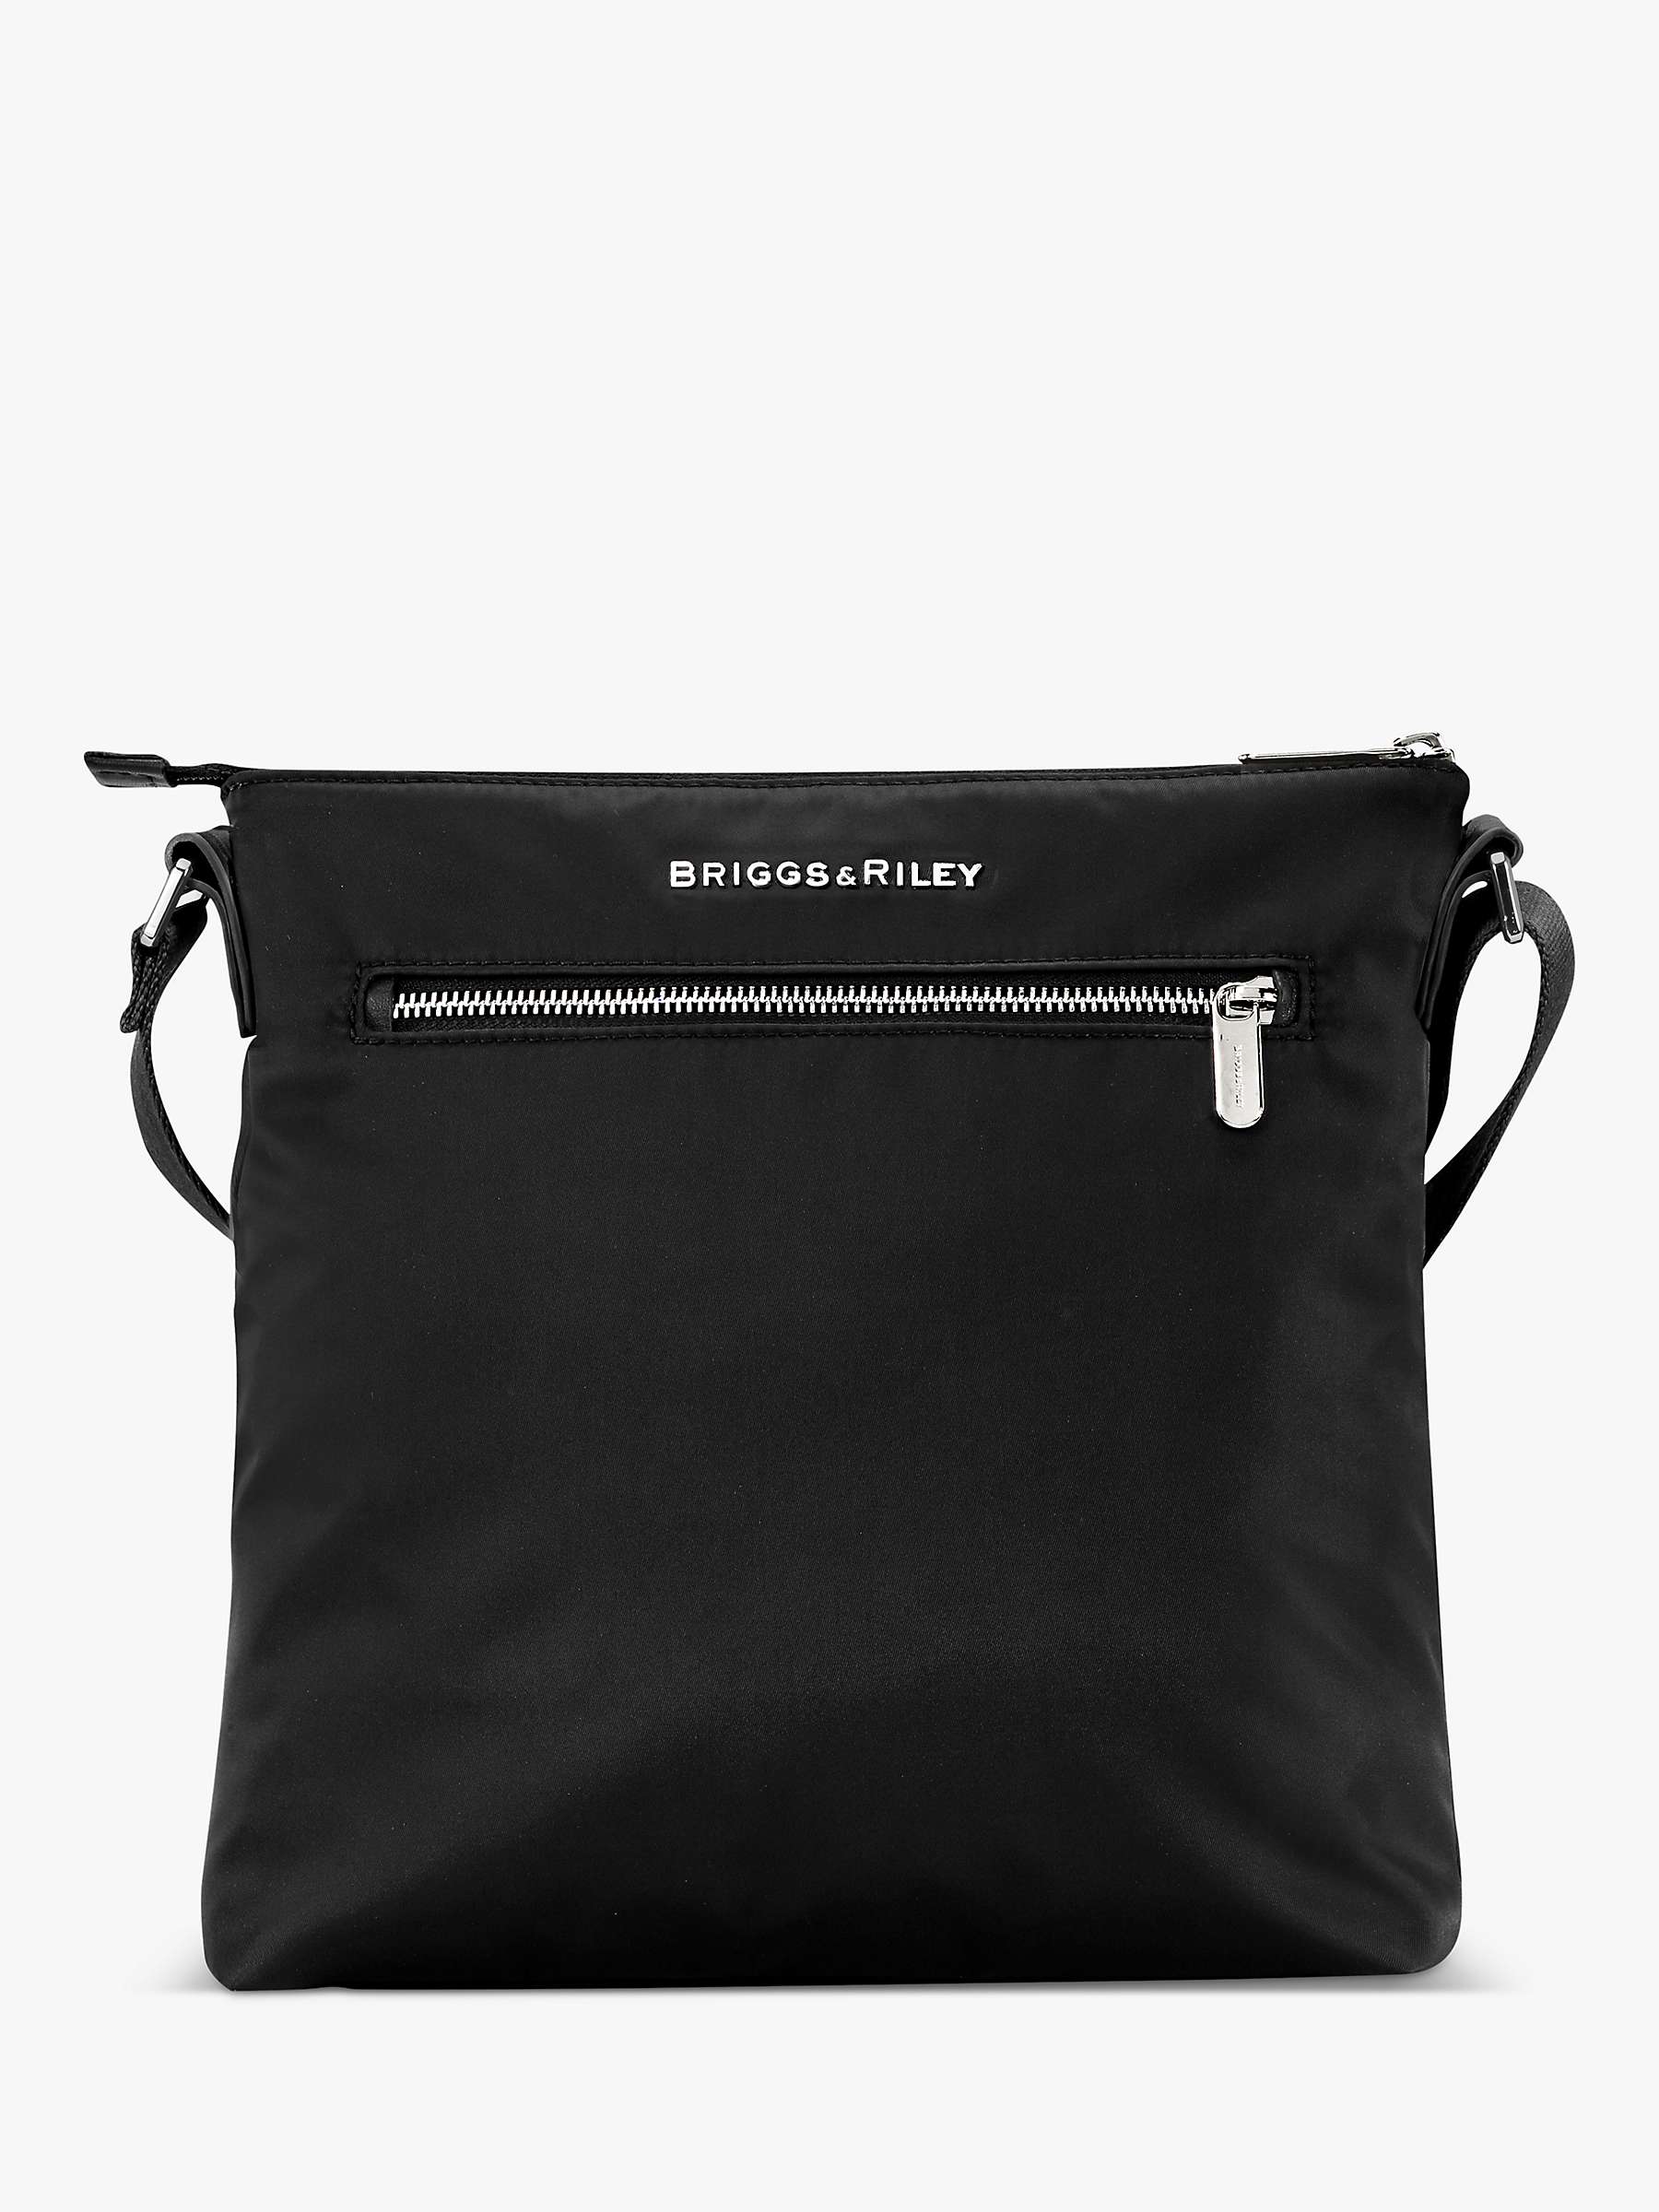 Buy Briggs & Riley Rhapsody Cross Body Bag Online at johnlewis.com